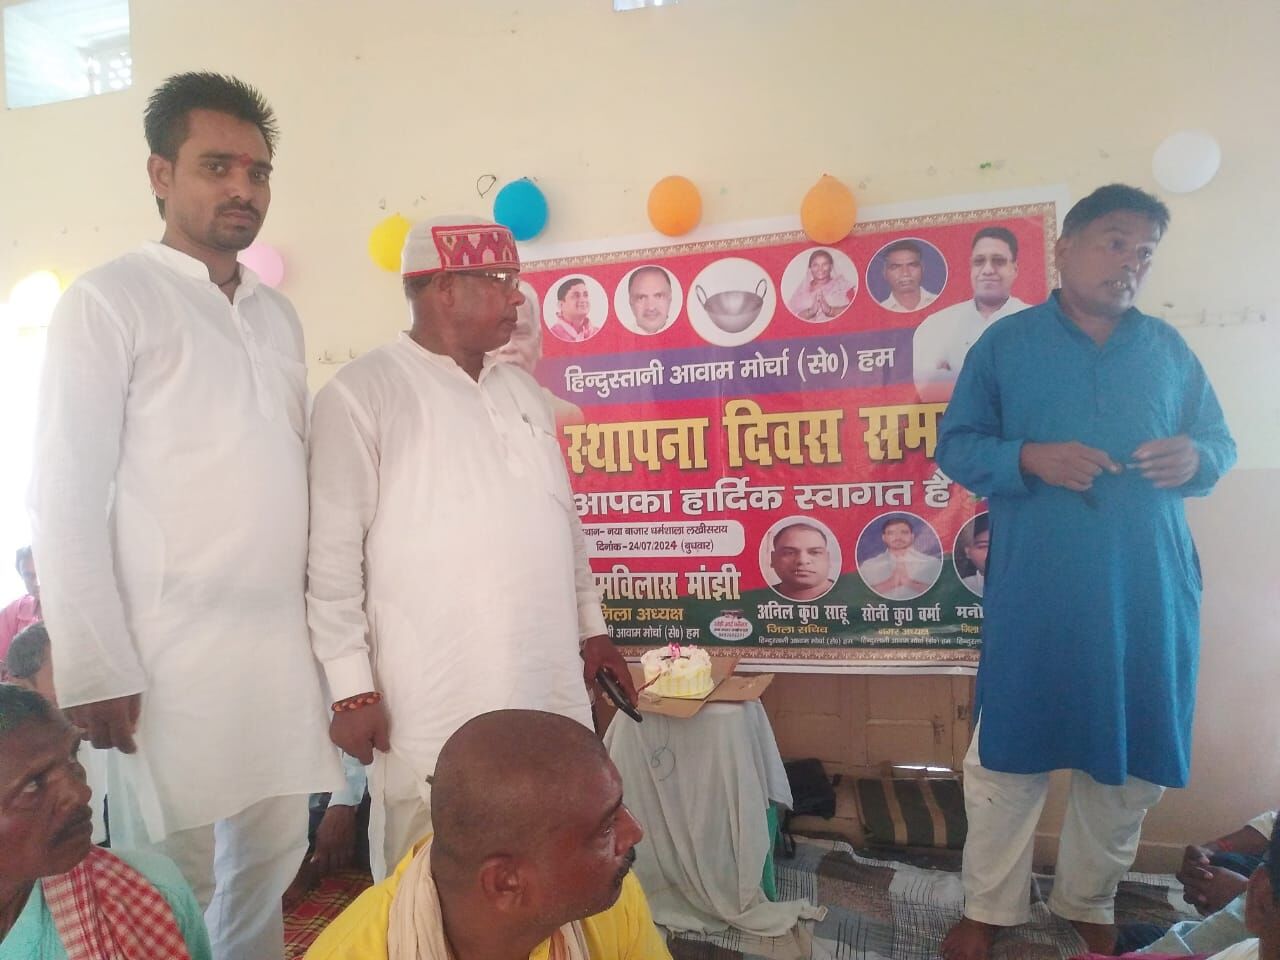 Lakhisarai: हिंदुस्तानी आवामी मोर्चा सेकुलर हम पार्टी की नौंवी स्थापना दिवस समारोह आयोजित